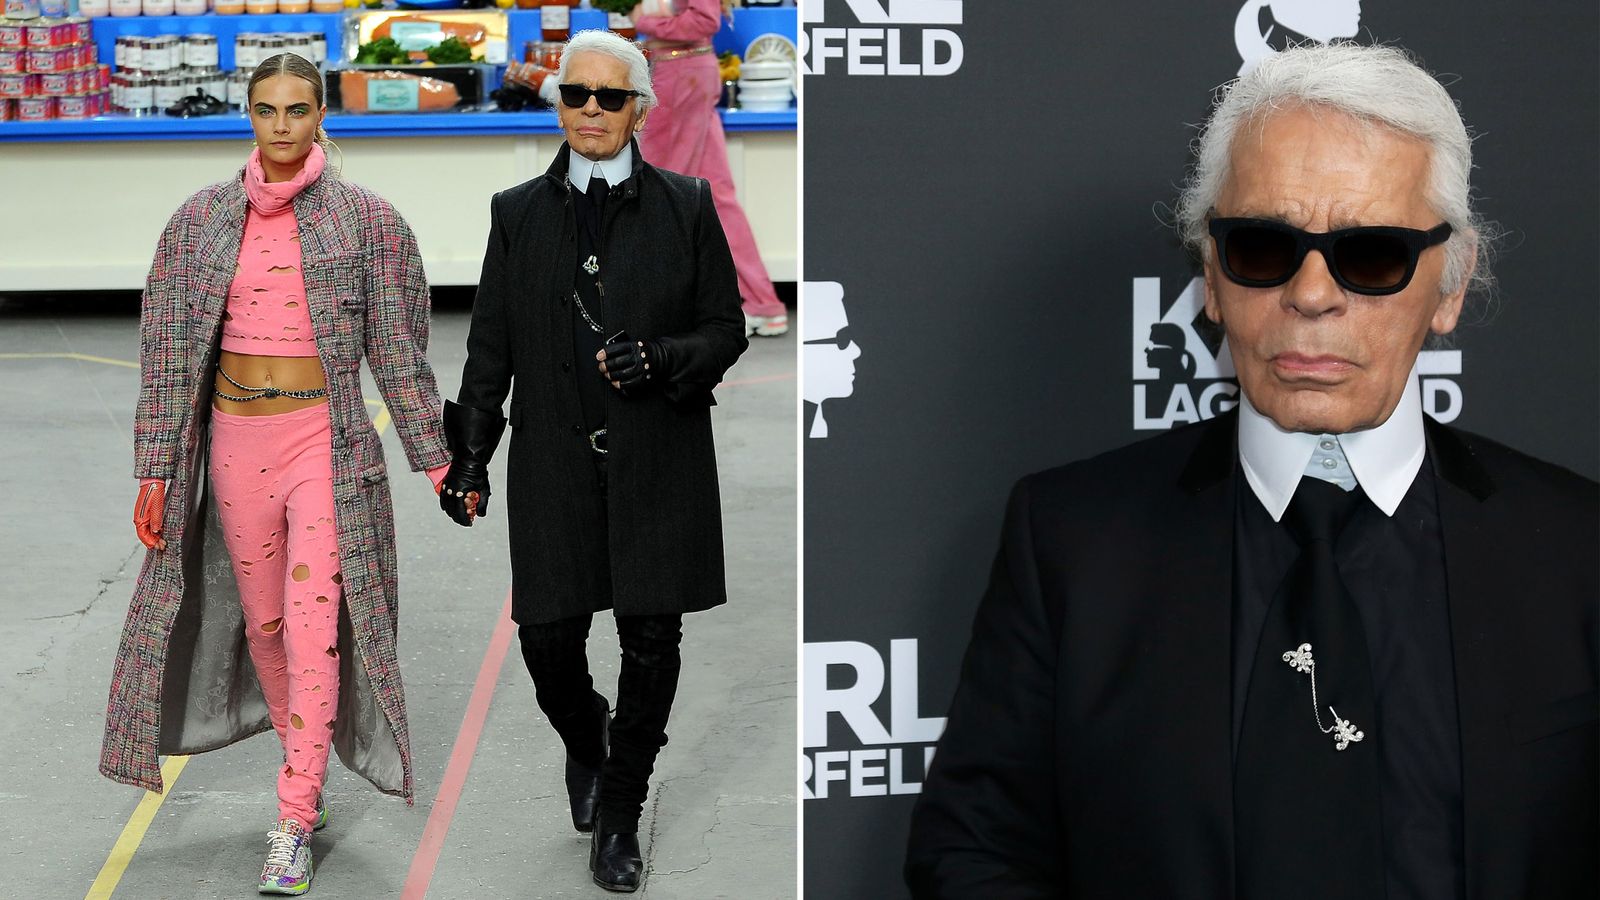 Obituary: Karl Lagerfeld, Chanel's iconic fashion designer - BBC News